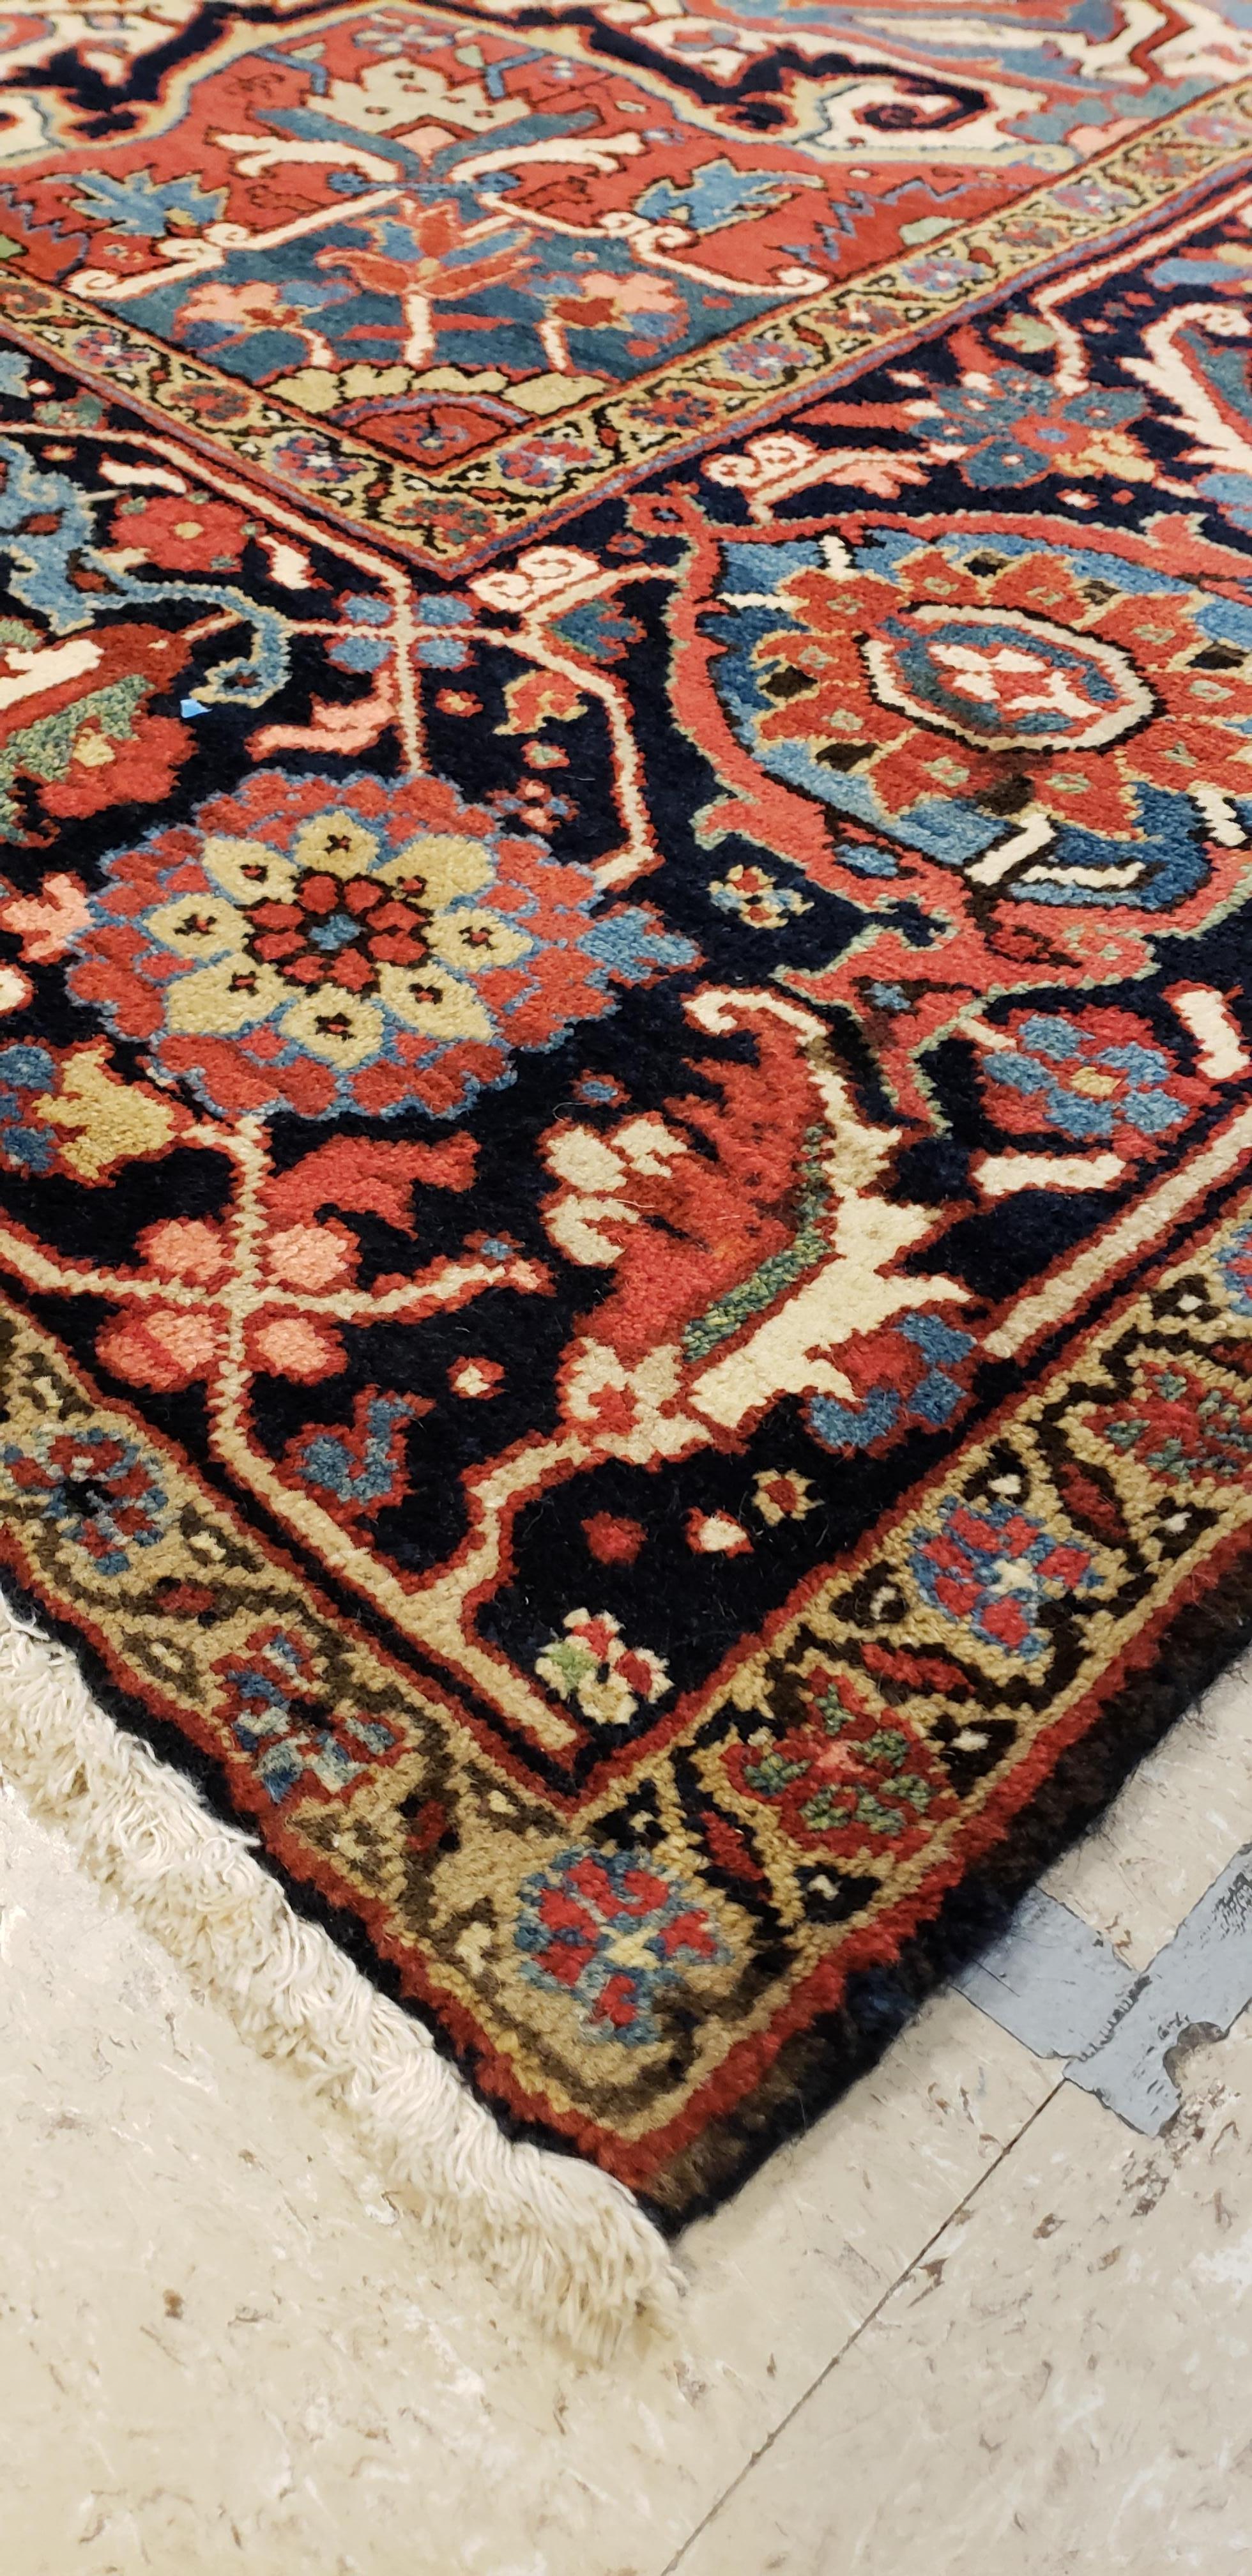 20th Century Antique Persian Heriz Carpet, Handmade Wool Oriental Rug, Rust, Navy, Lt Blue